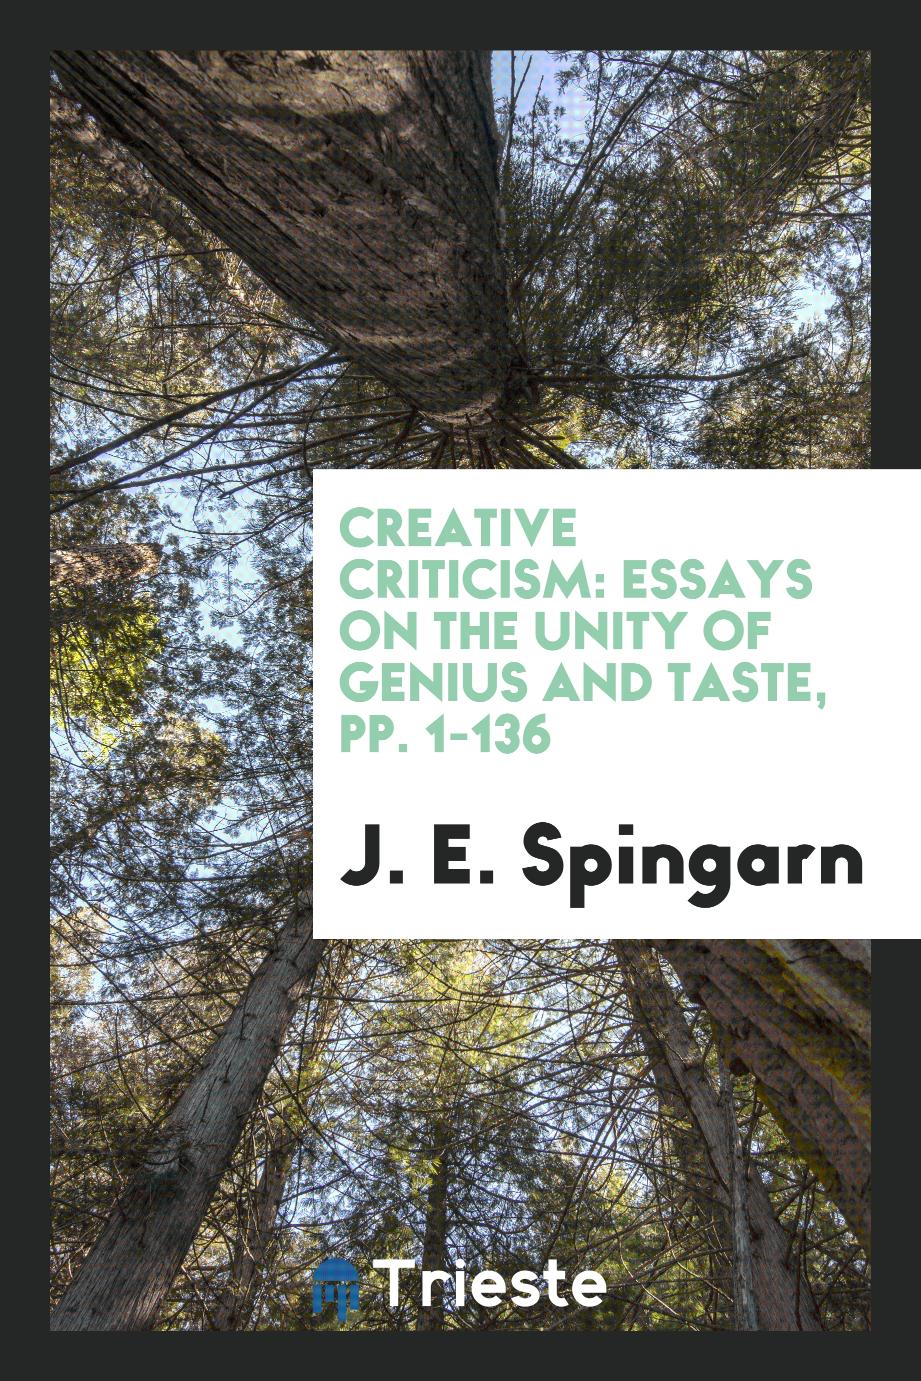 Creative Criticism: Essays on the Unity of Genius and Taste, pp. 1-136